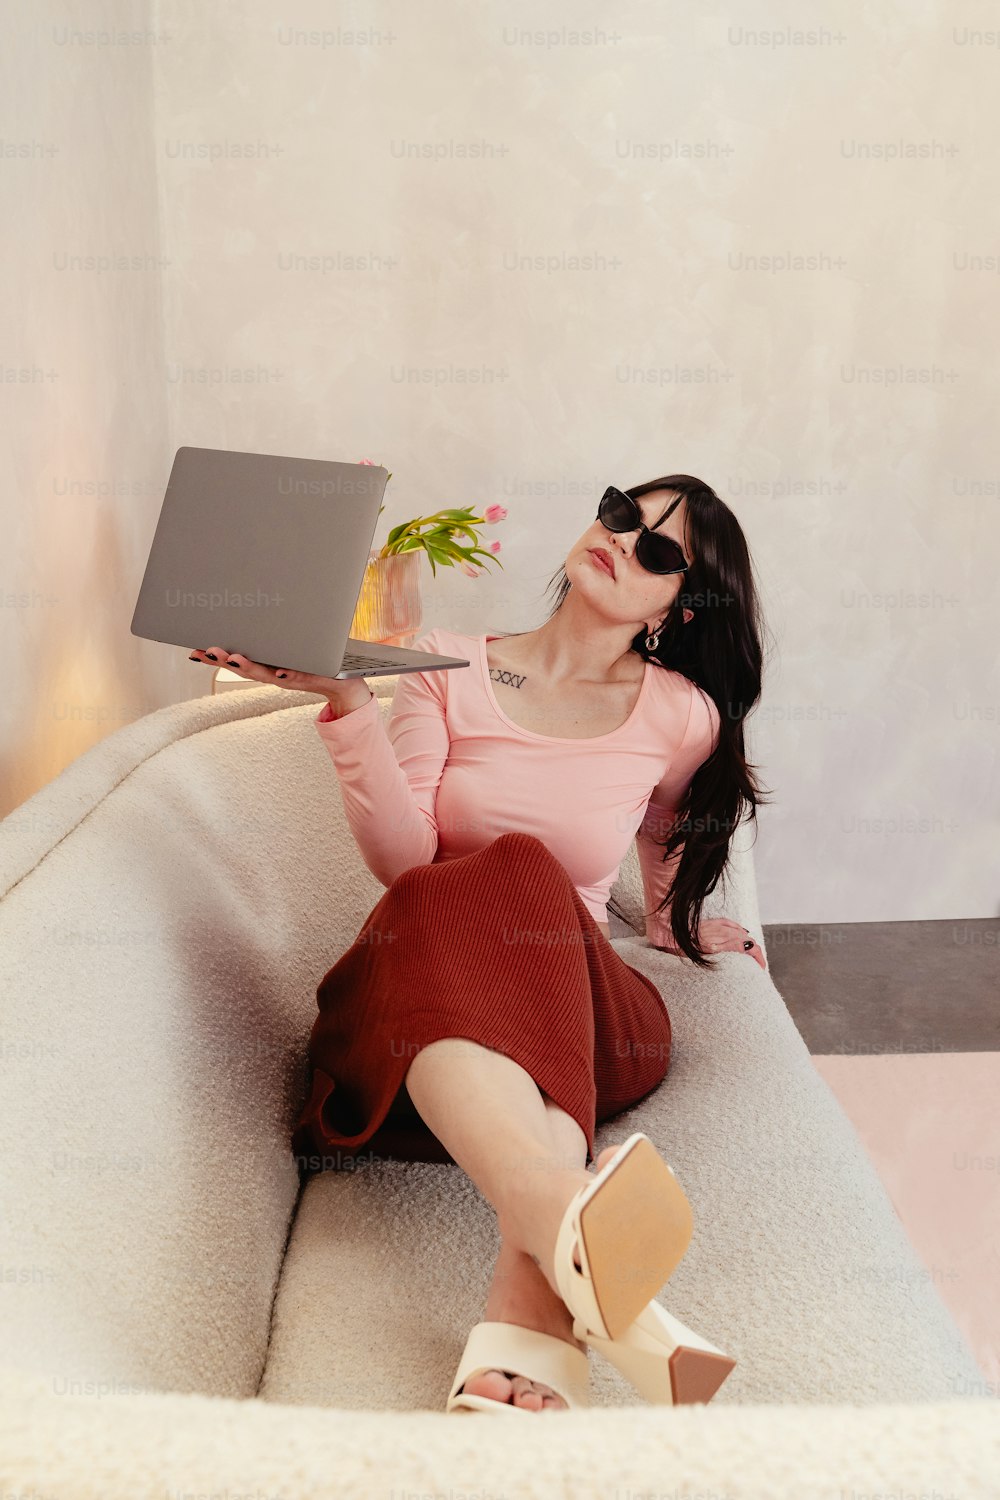 una donna seduta su un divano con in mano un computer portatile